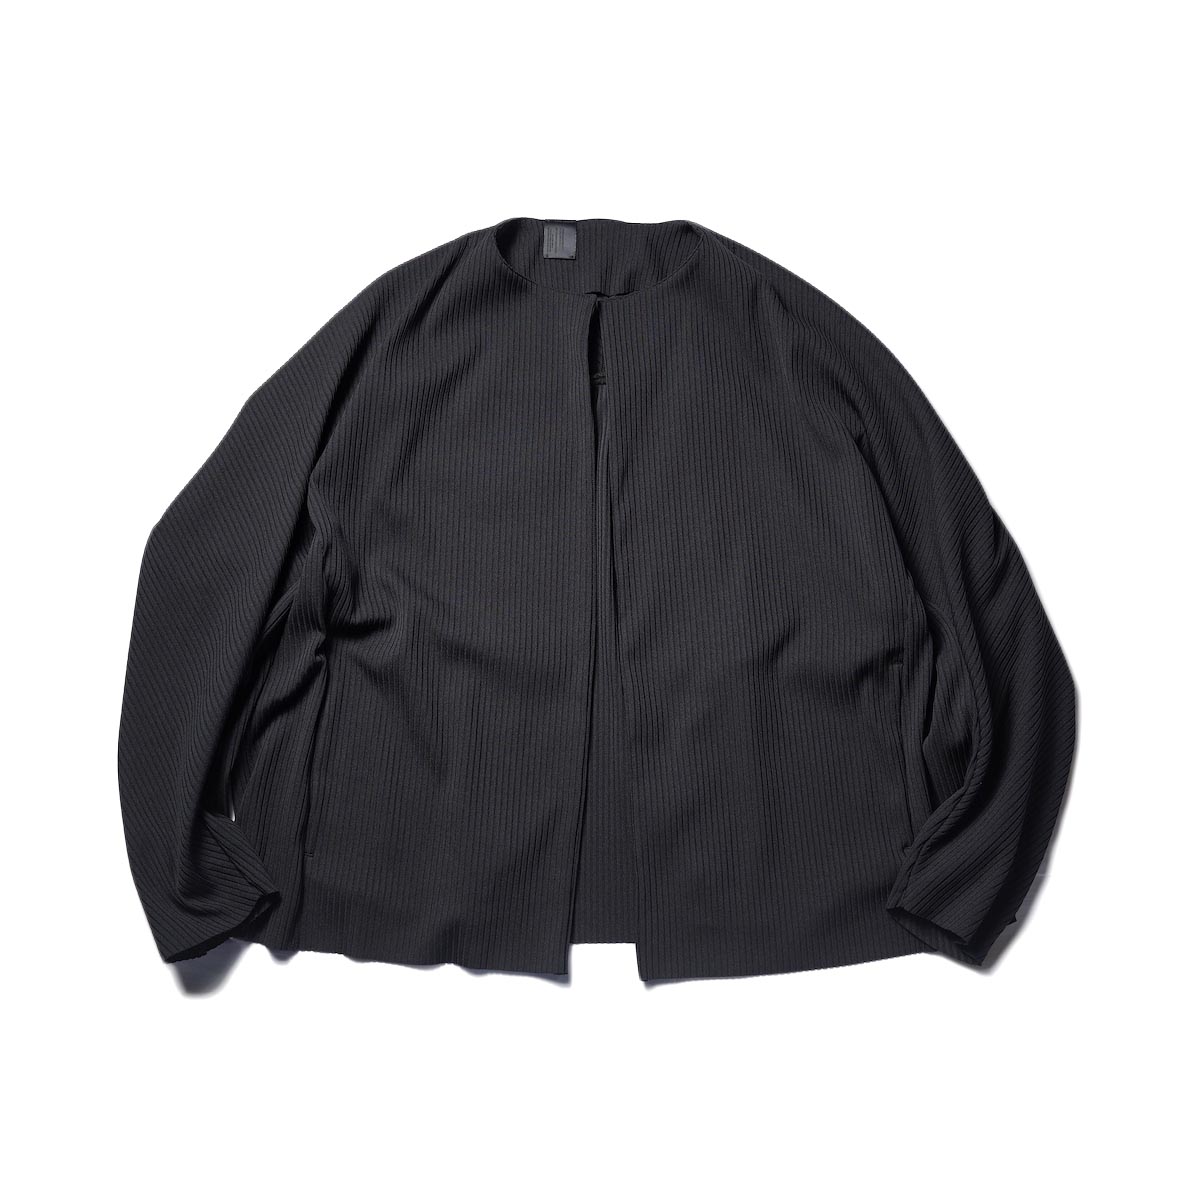 N.HOON.HOOLYWOOD COMPILE / 2231-SH20-060 peg Shirt (Black)LYWOOD COMPILE / 2231-BL01-098 peg Blouson (Black)